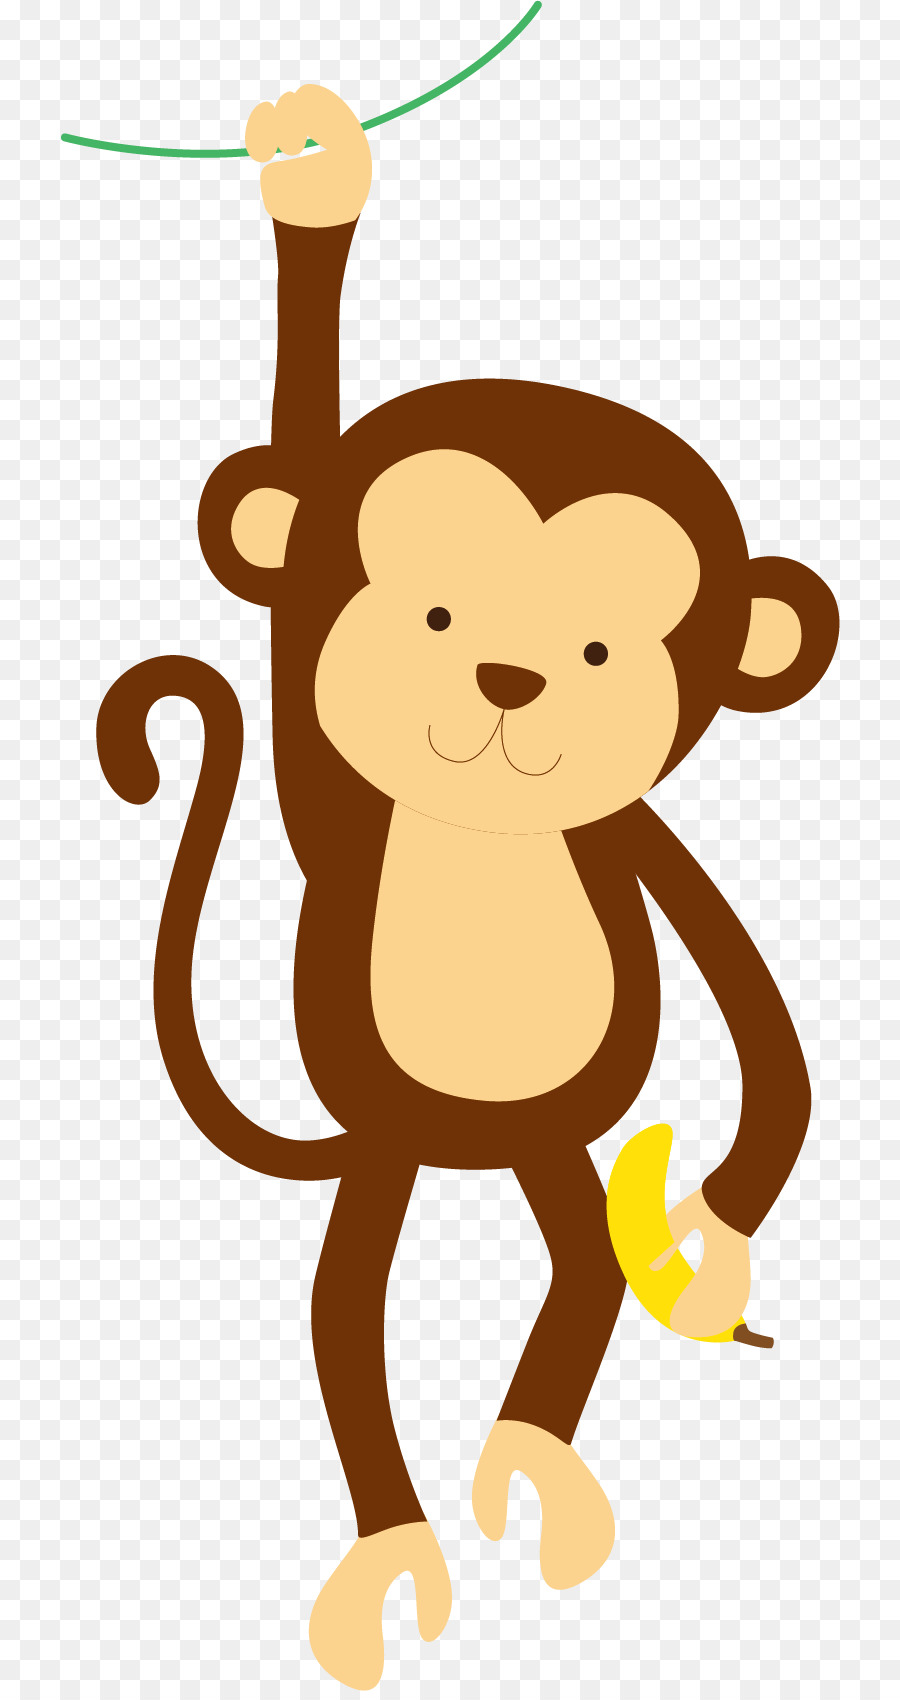 Giraffe Pony Monkey Cuteness - Take the monkey vector of banana png download - 780*1691 - Free Transparent Giraffe png Download.